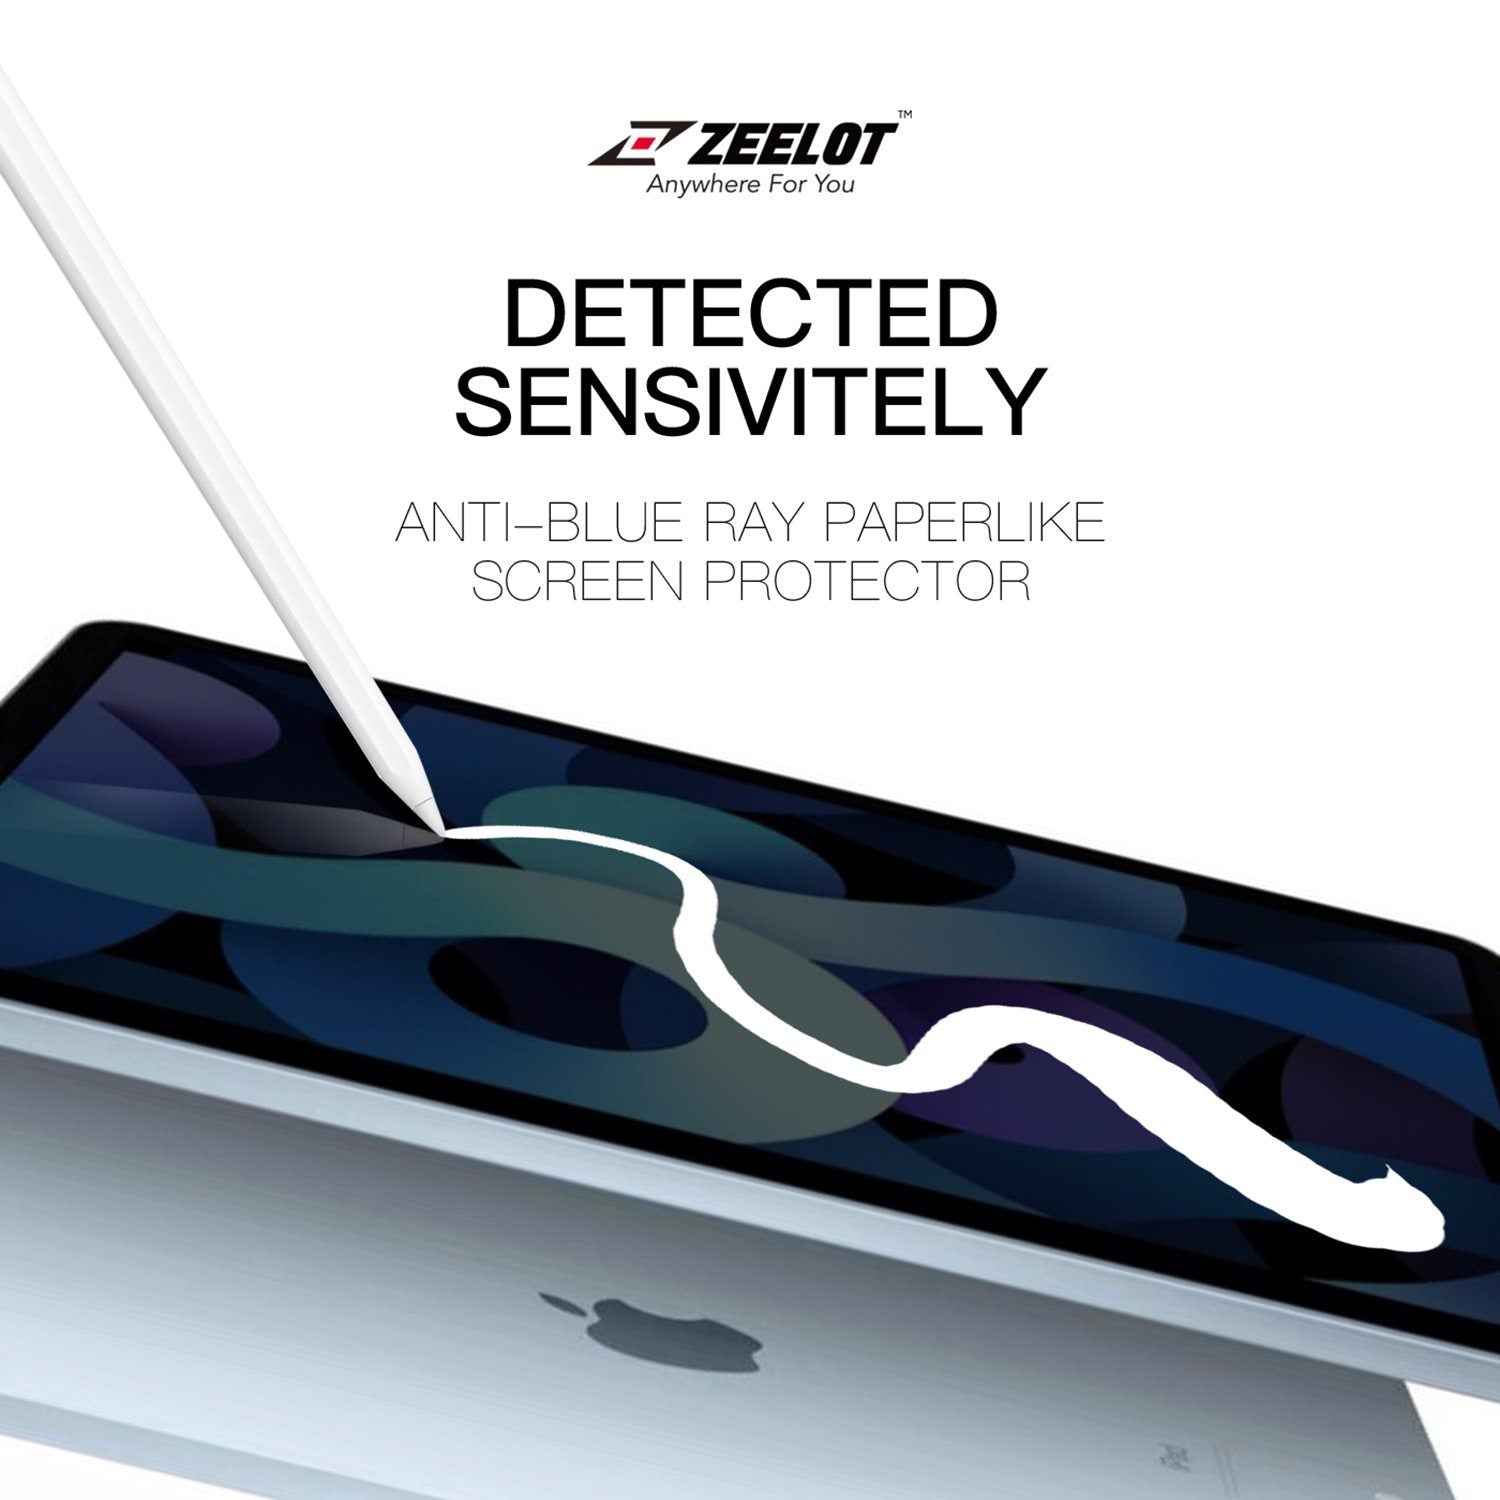 ZEELOT Anti Blue Ray Paper Like Screen Protector for iPad 10.5"(2019/2017) Default Zeelot 